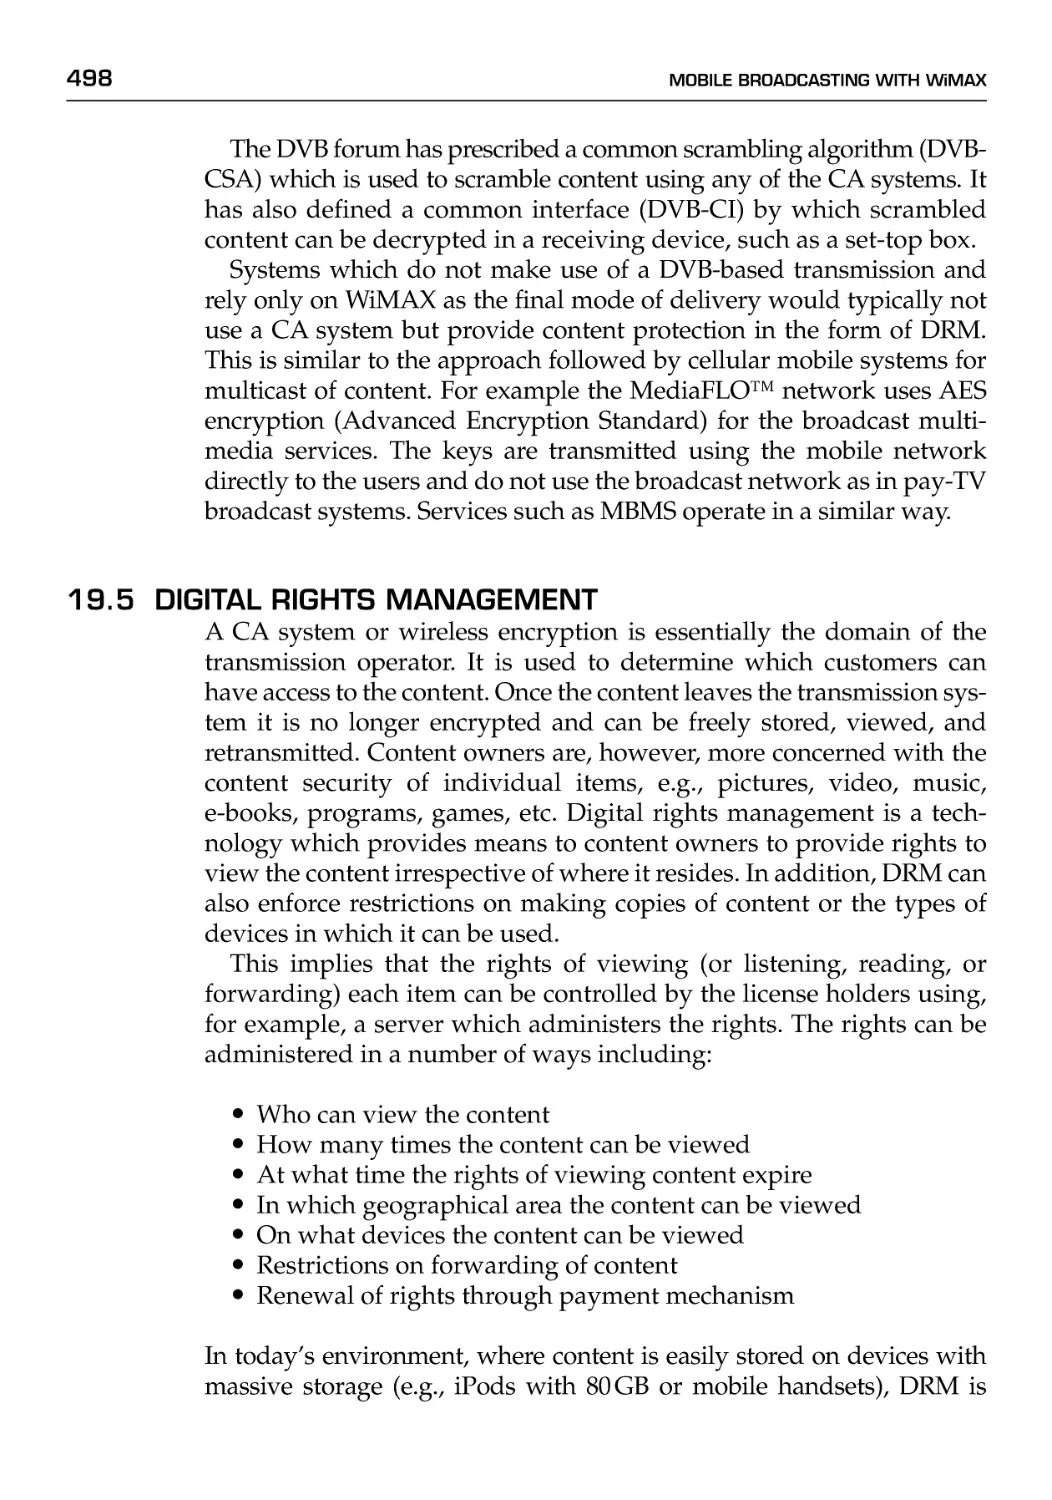 19.5 Digital Rights Management